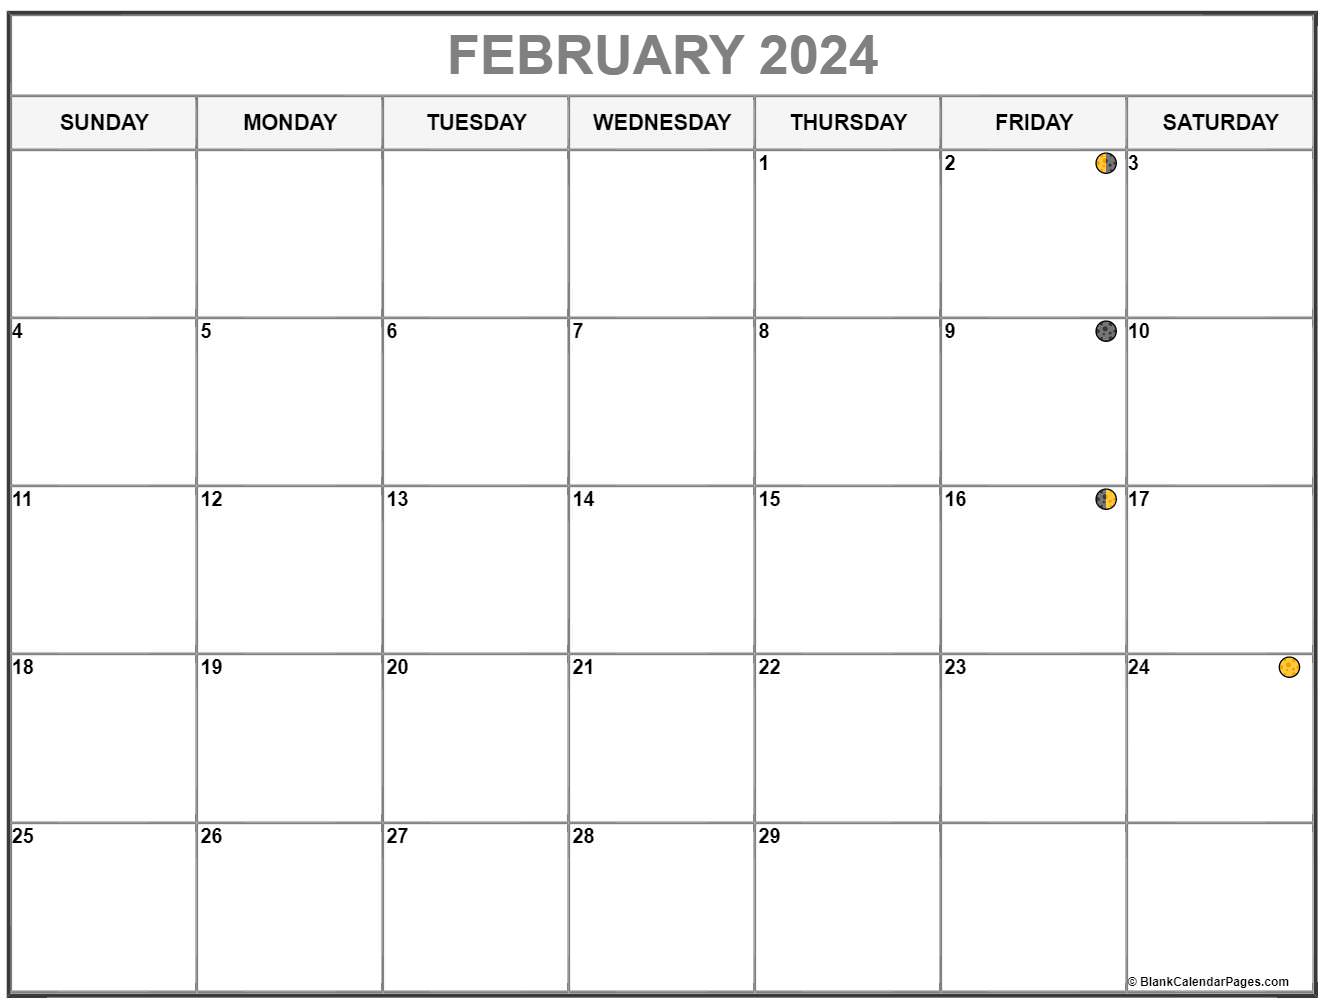 February 2020 Lunar Calendar | Moon Phase Calendar